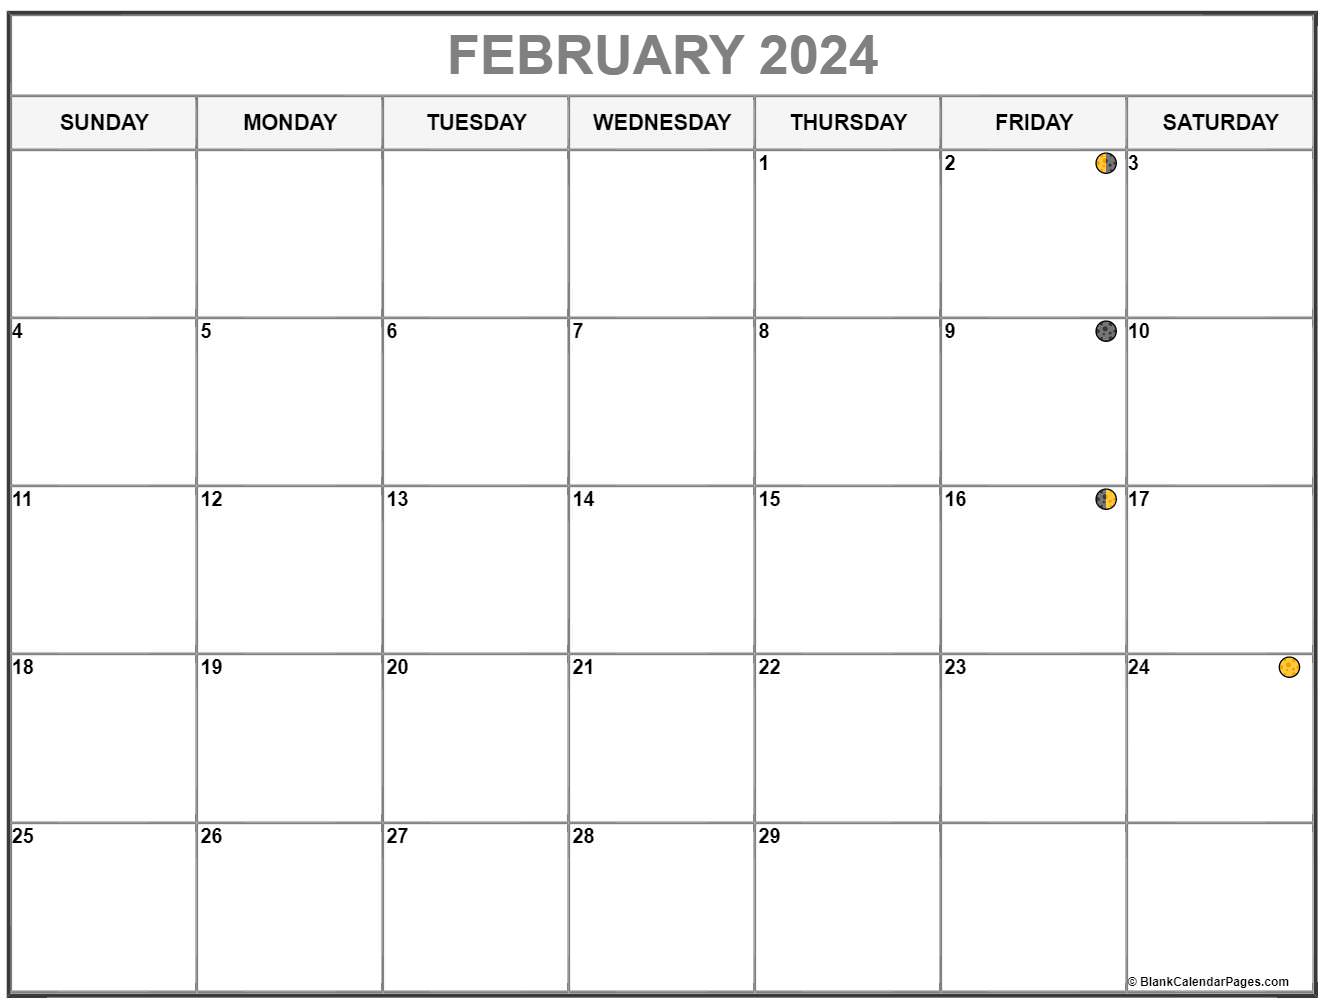 February 2020 Lunar Calendar | Moon Phase Calendar